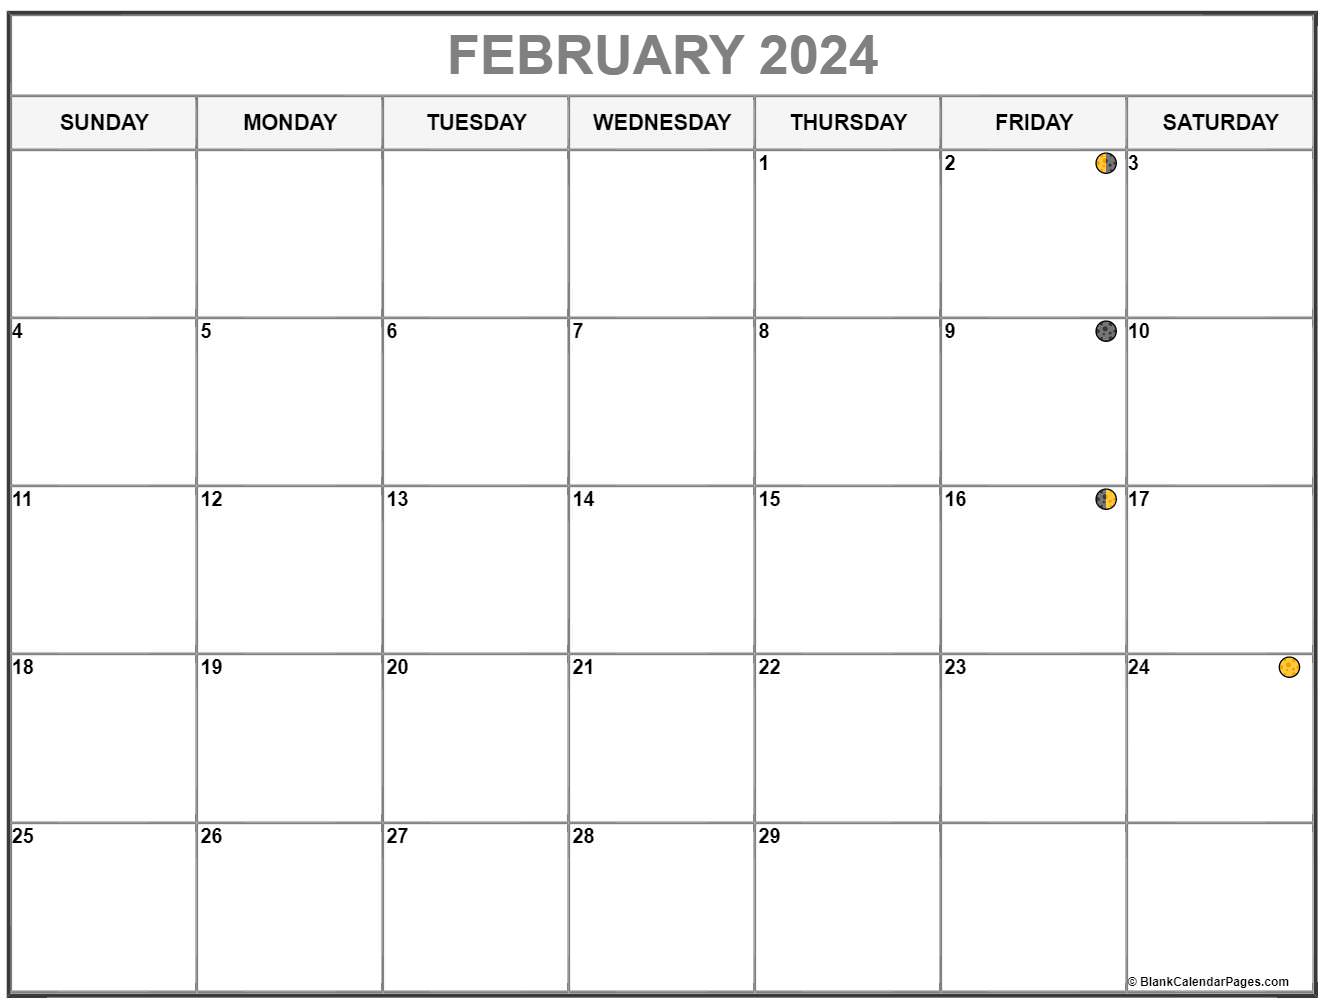 February 2020 Lunar Calendar | Moon Phase Calendar